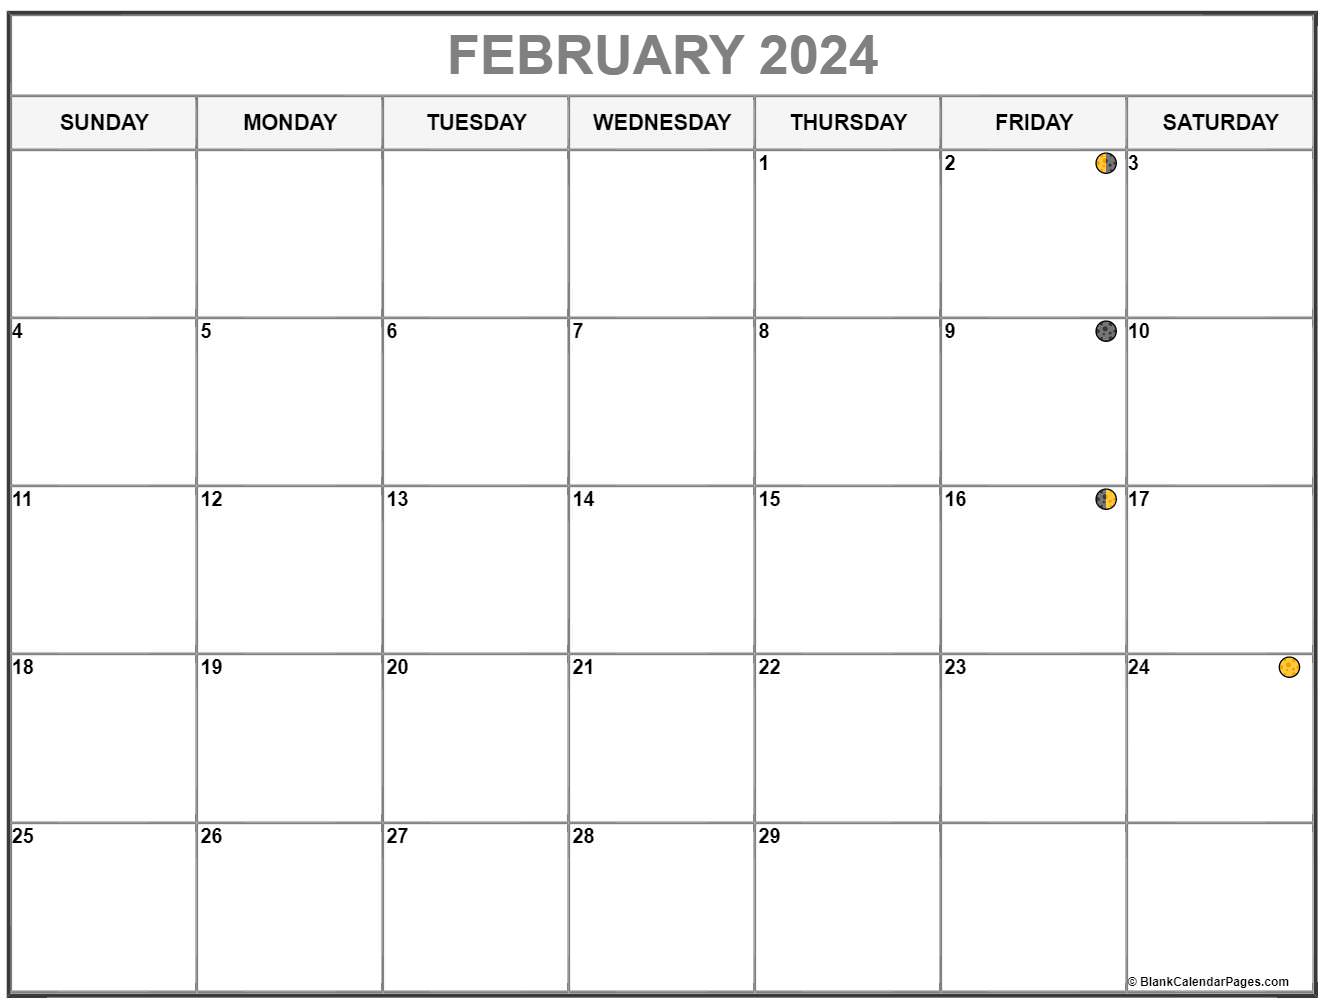 February 2020 Lunar Calendar | Moon Phase Calendar